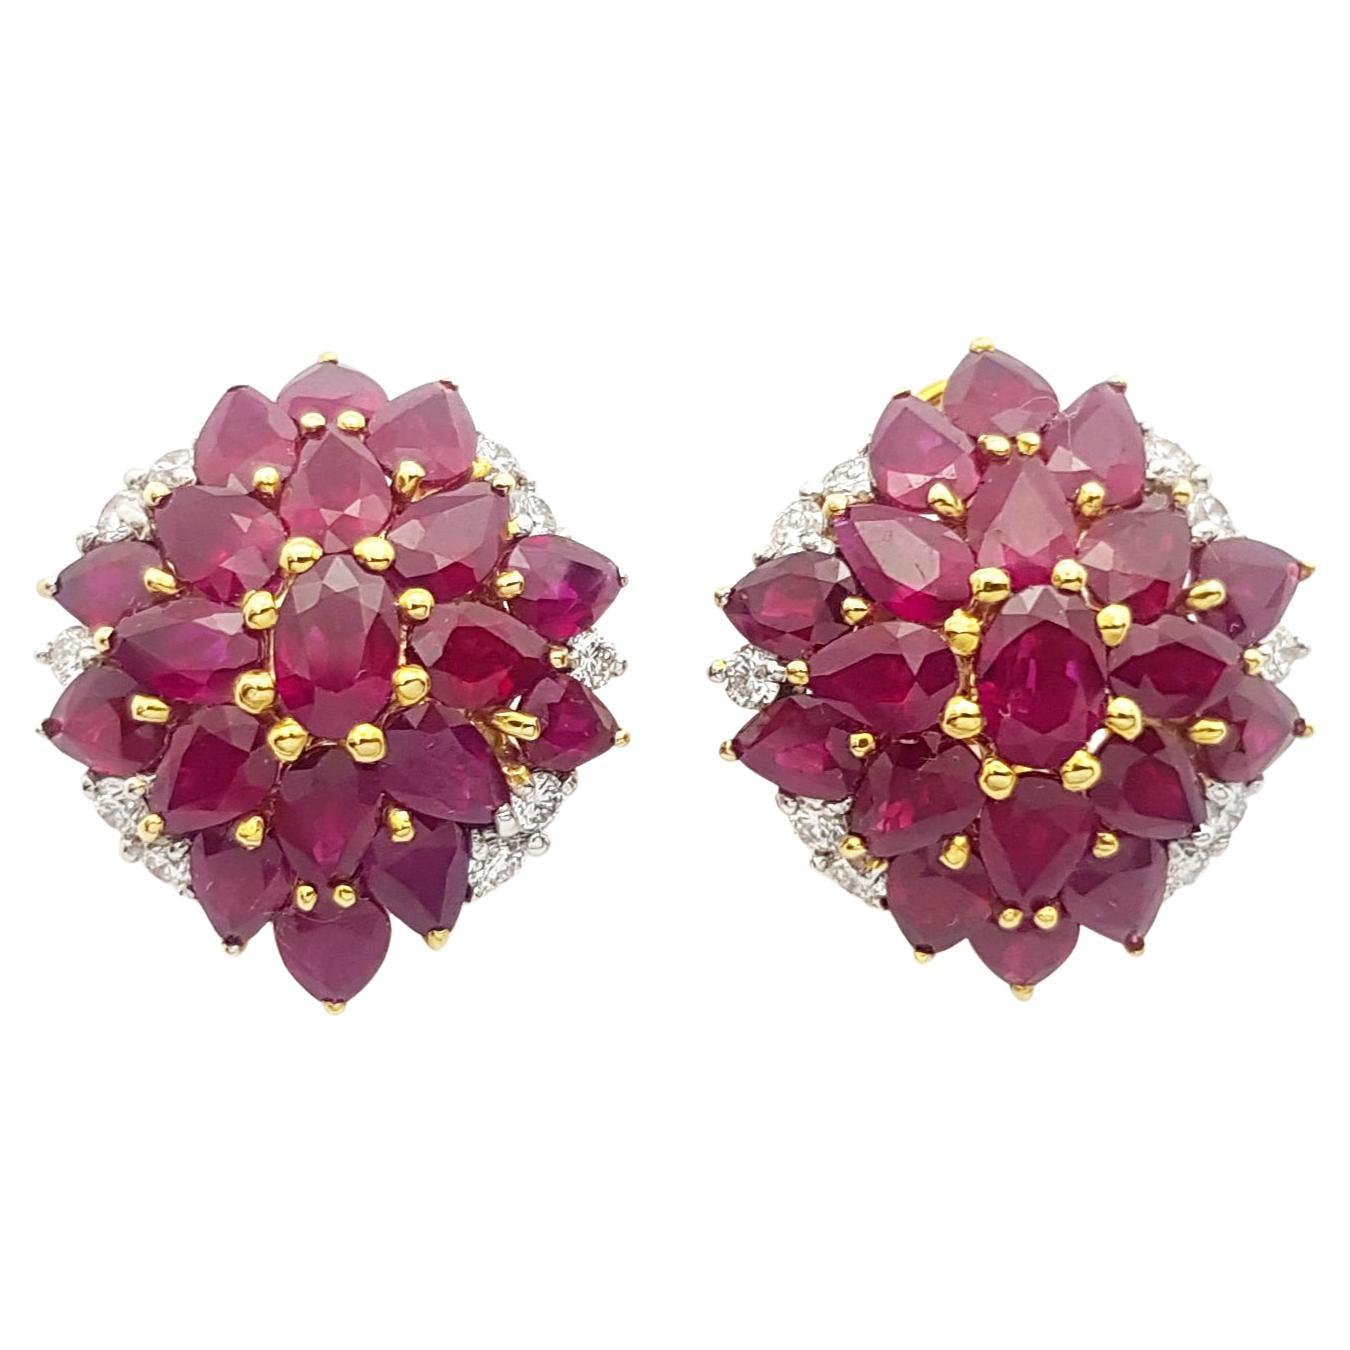 Ruby with Diamond Earrings Set in 18k Gold Settings